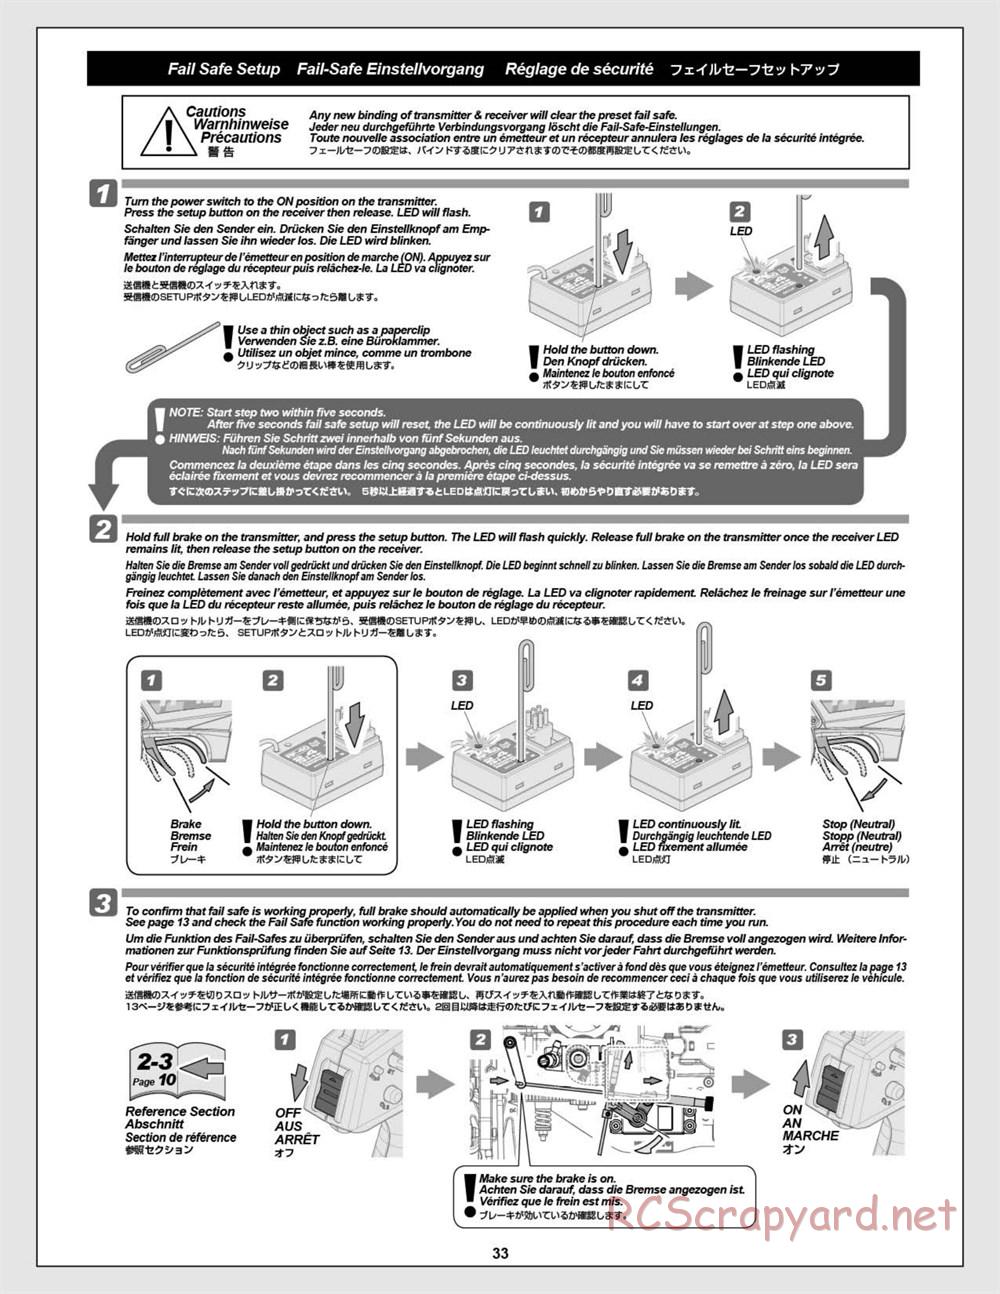 HPI - Firestorm 10T - Manual - Page 33